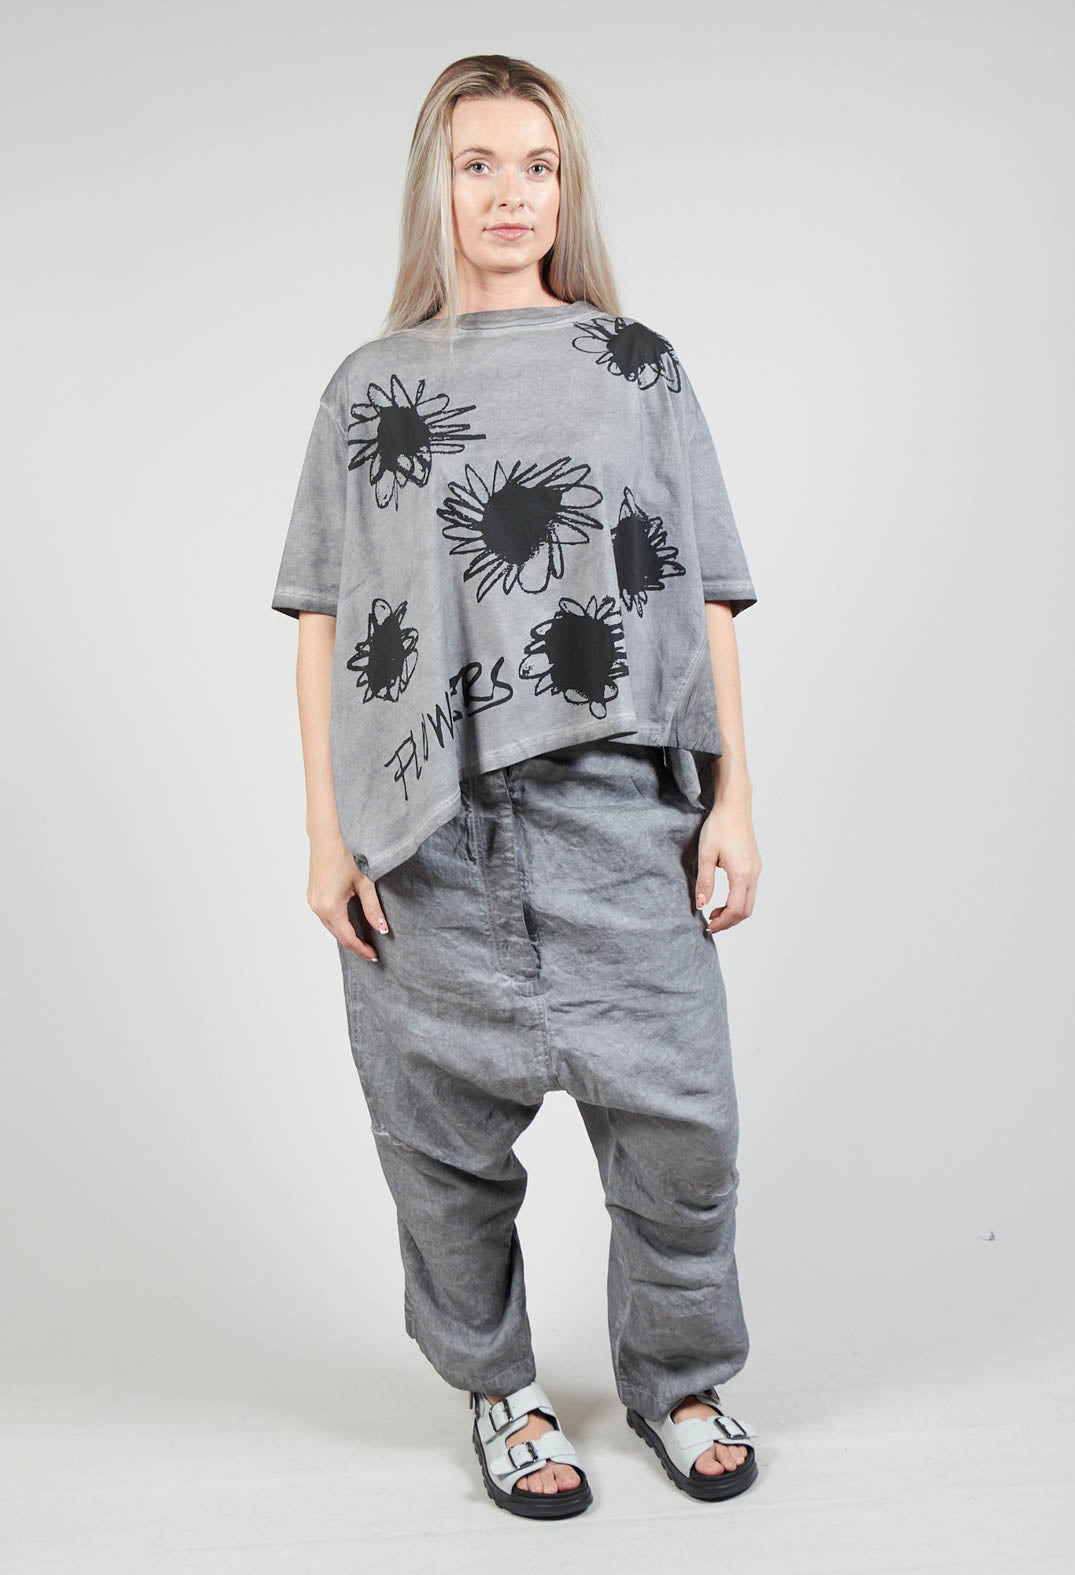 Sunflower graphic T-Shirt in C.Coal 70% Flock Cloud